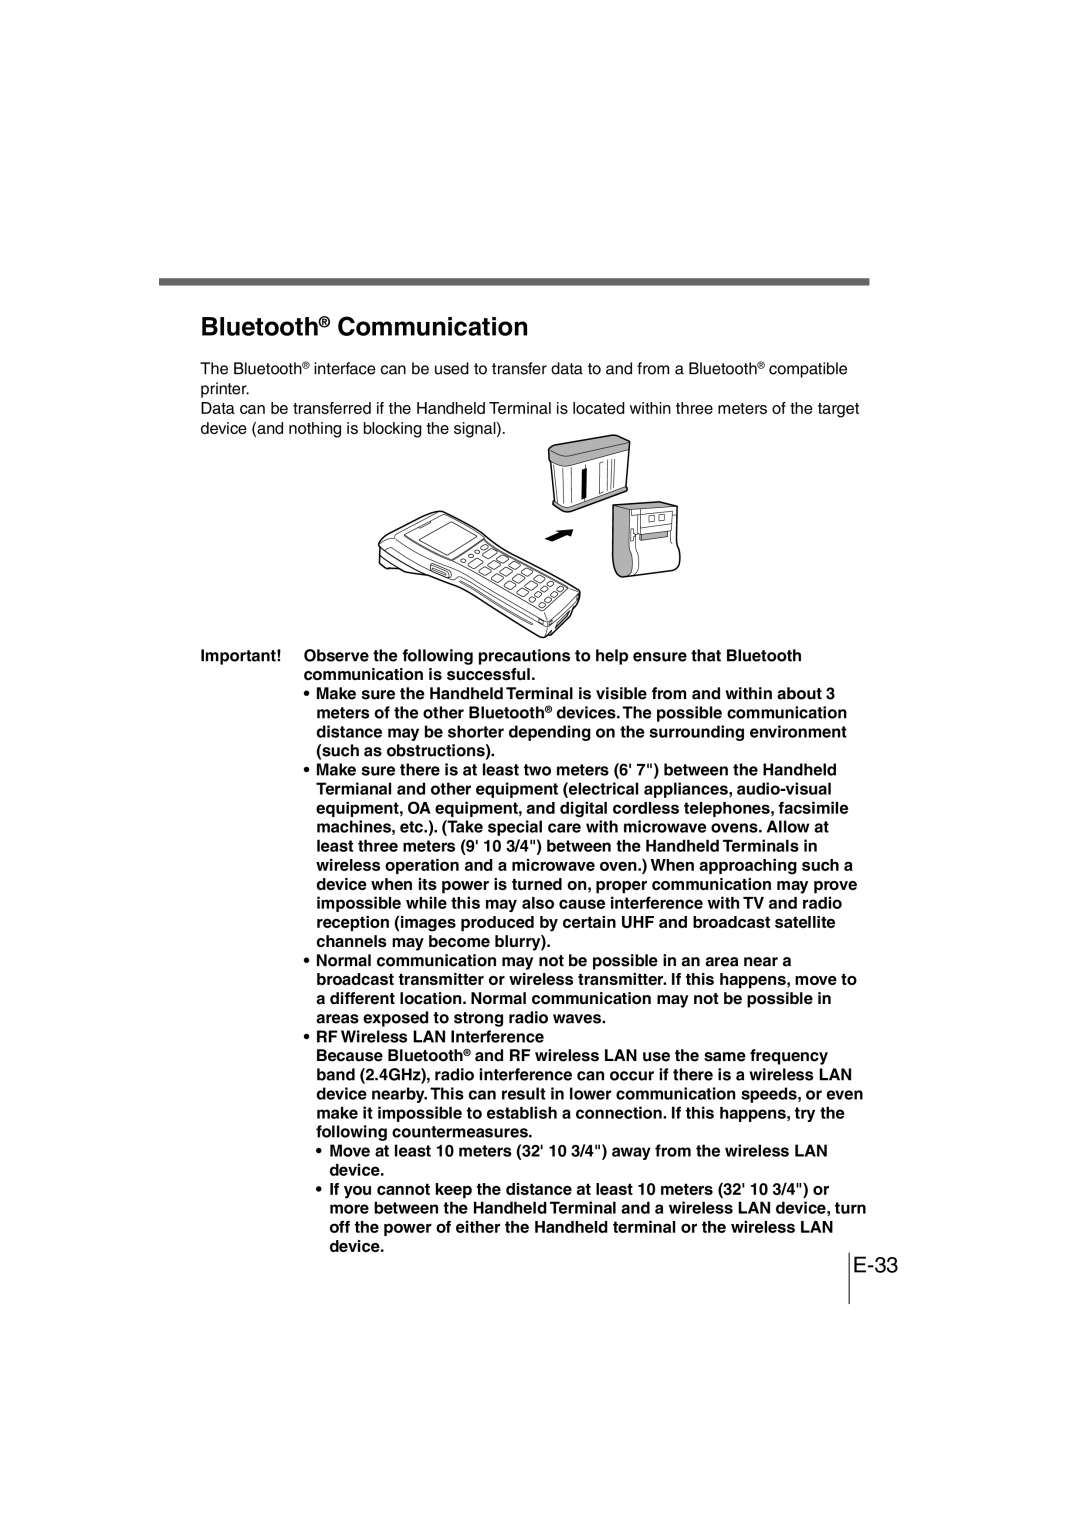 Casio DT-930 manual Bluetooth Communication, E-33 